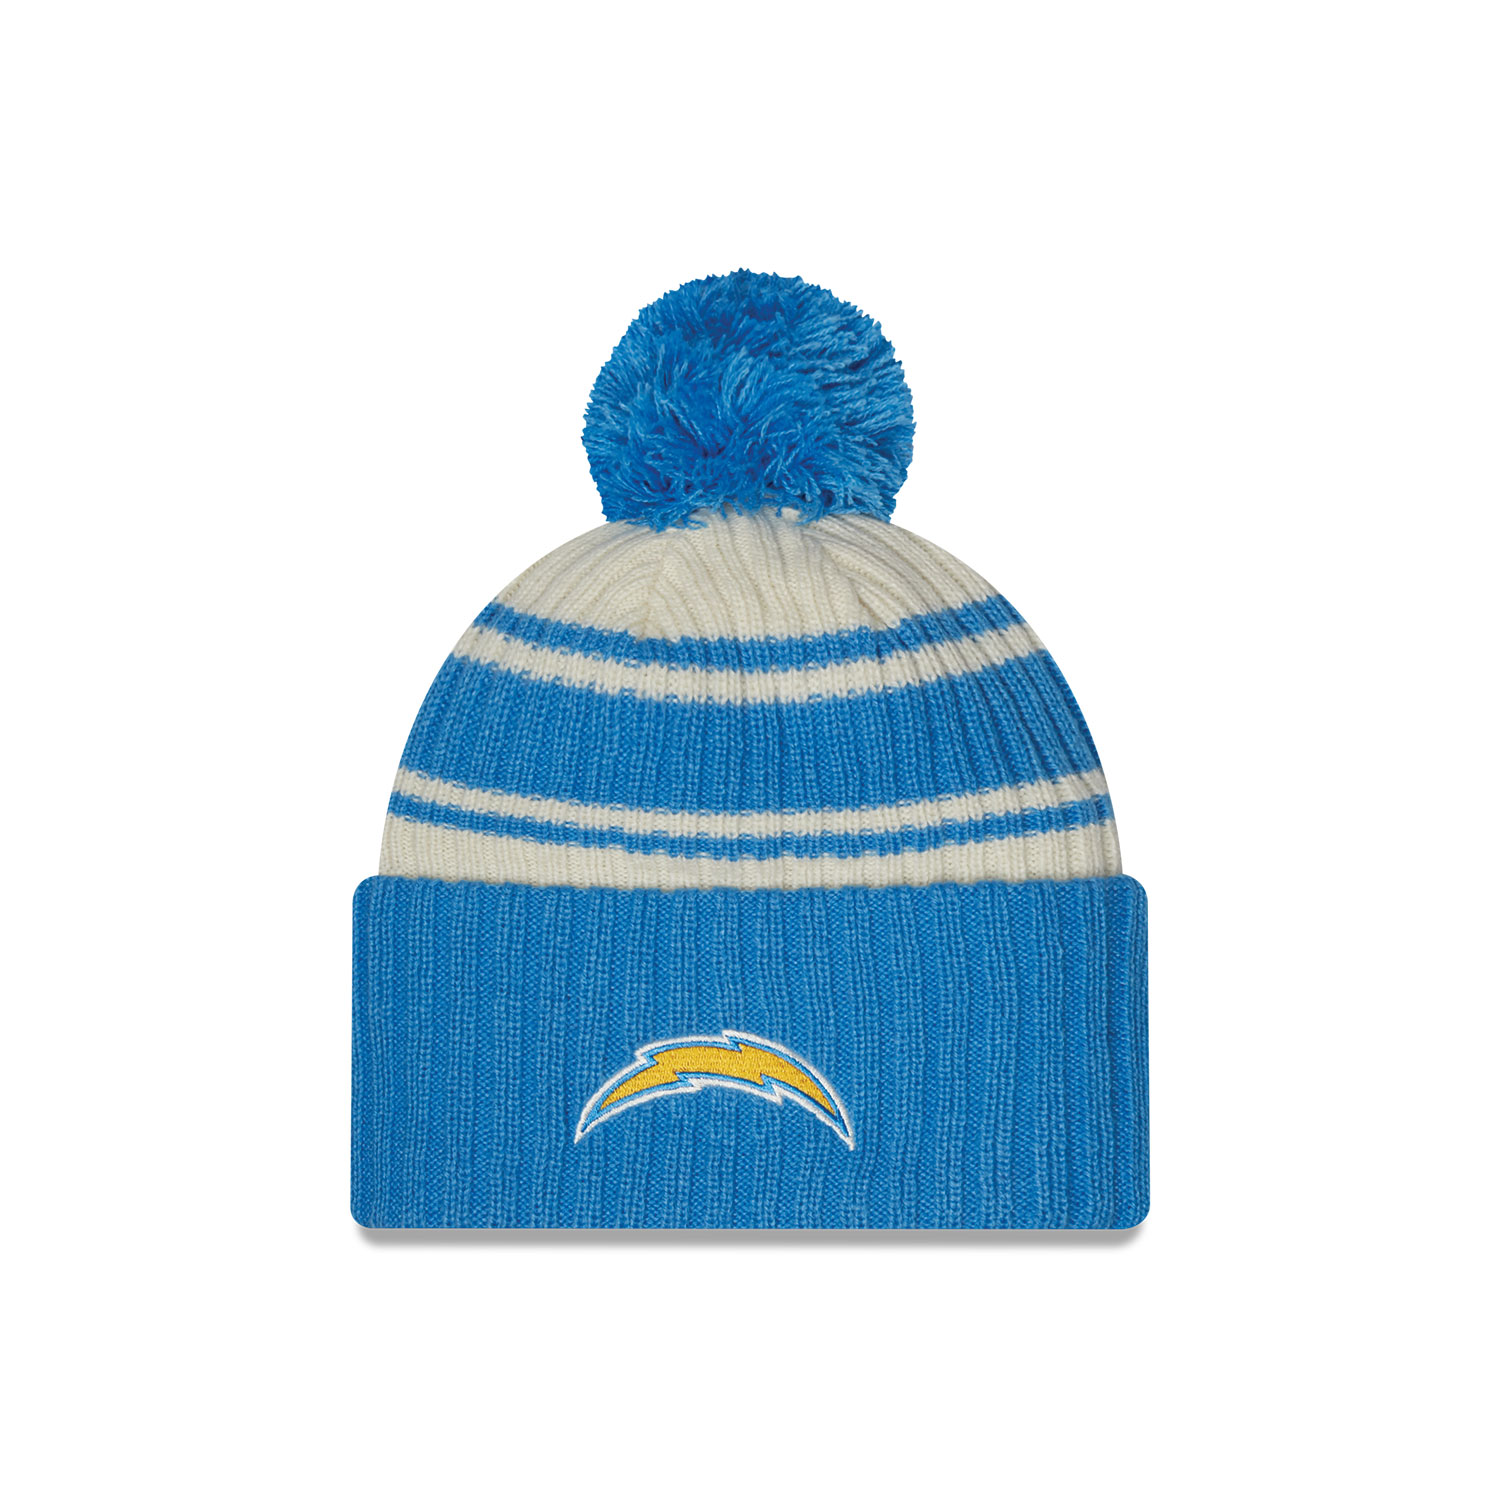 LA Chargers NFL Sideline Light Blue Beanie Hat